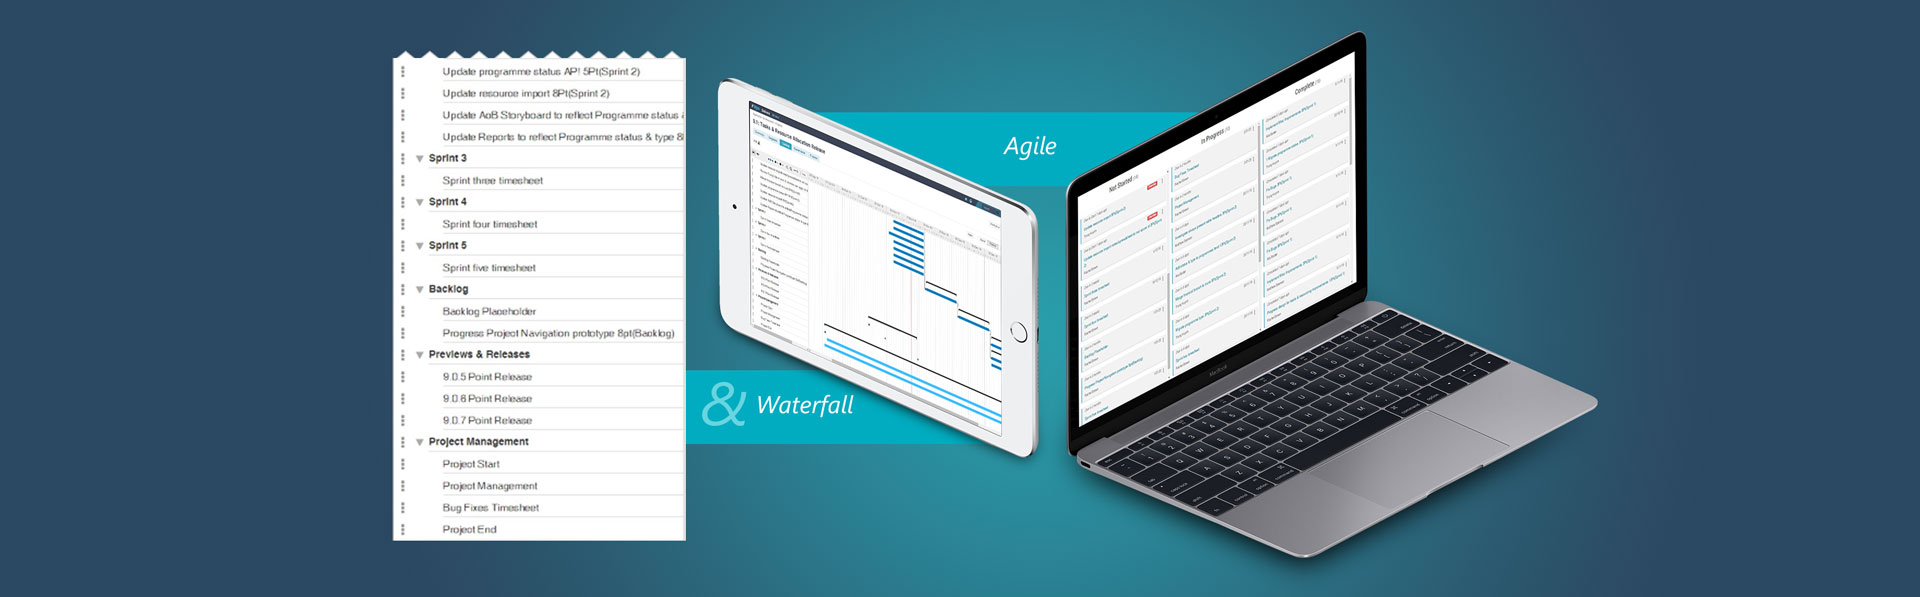 Agile and Waterfall methodologies screenshots